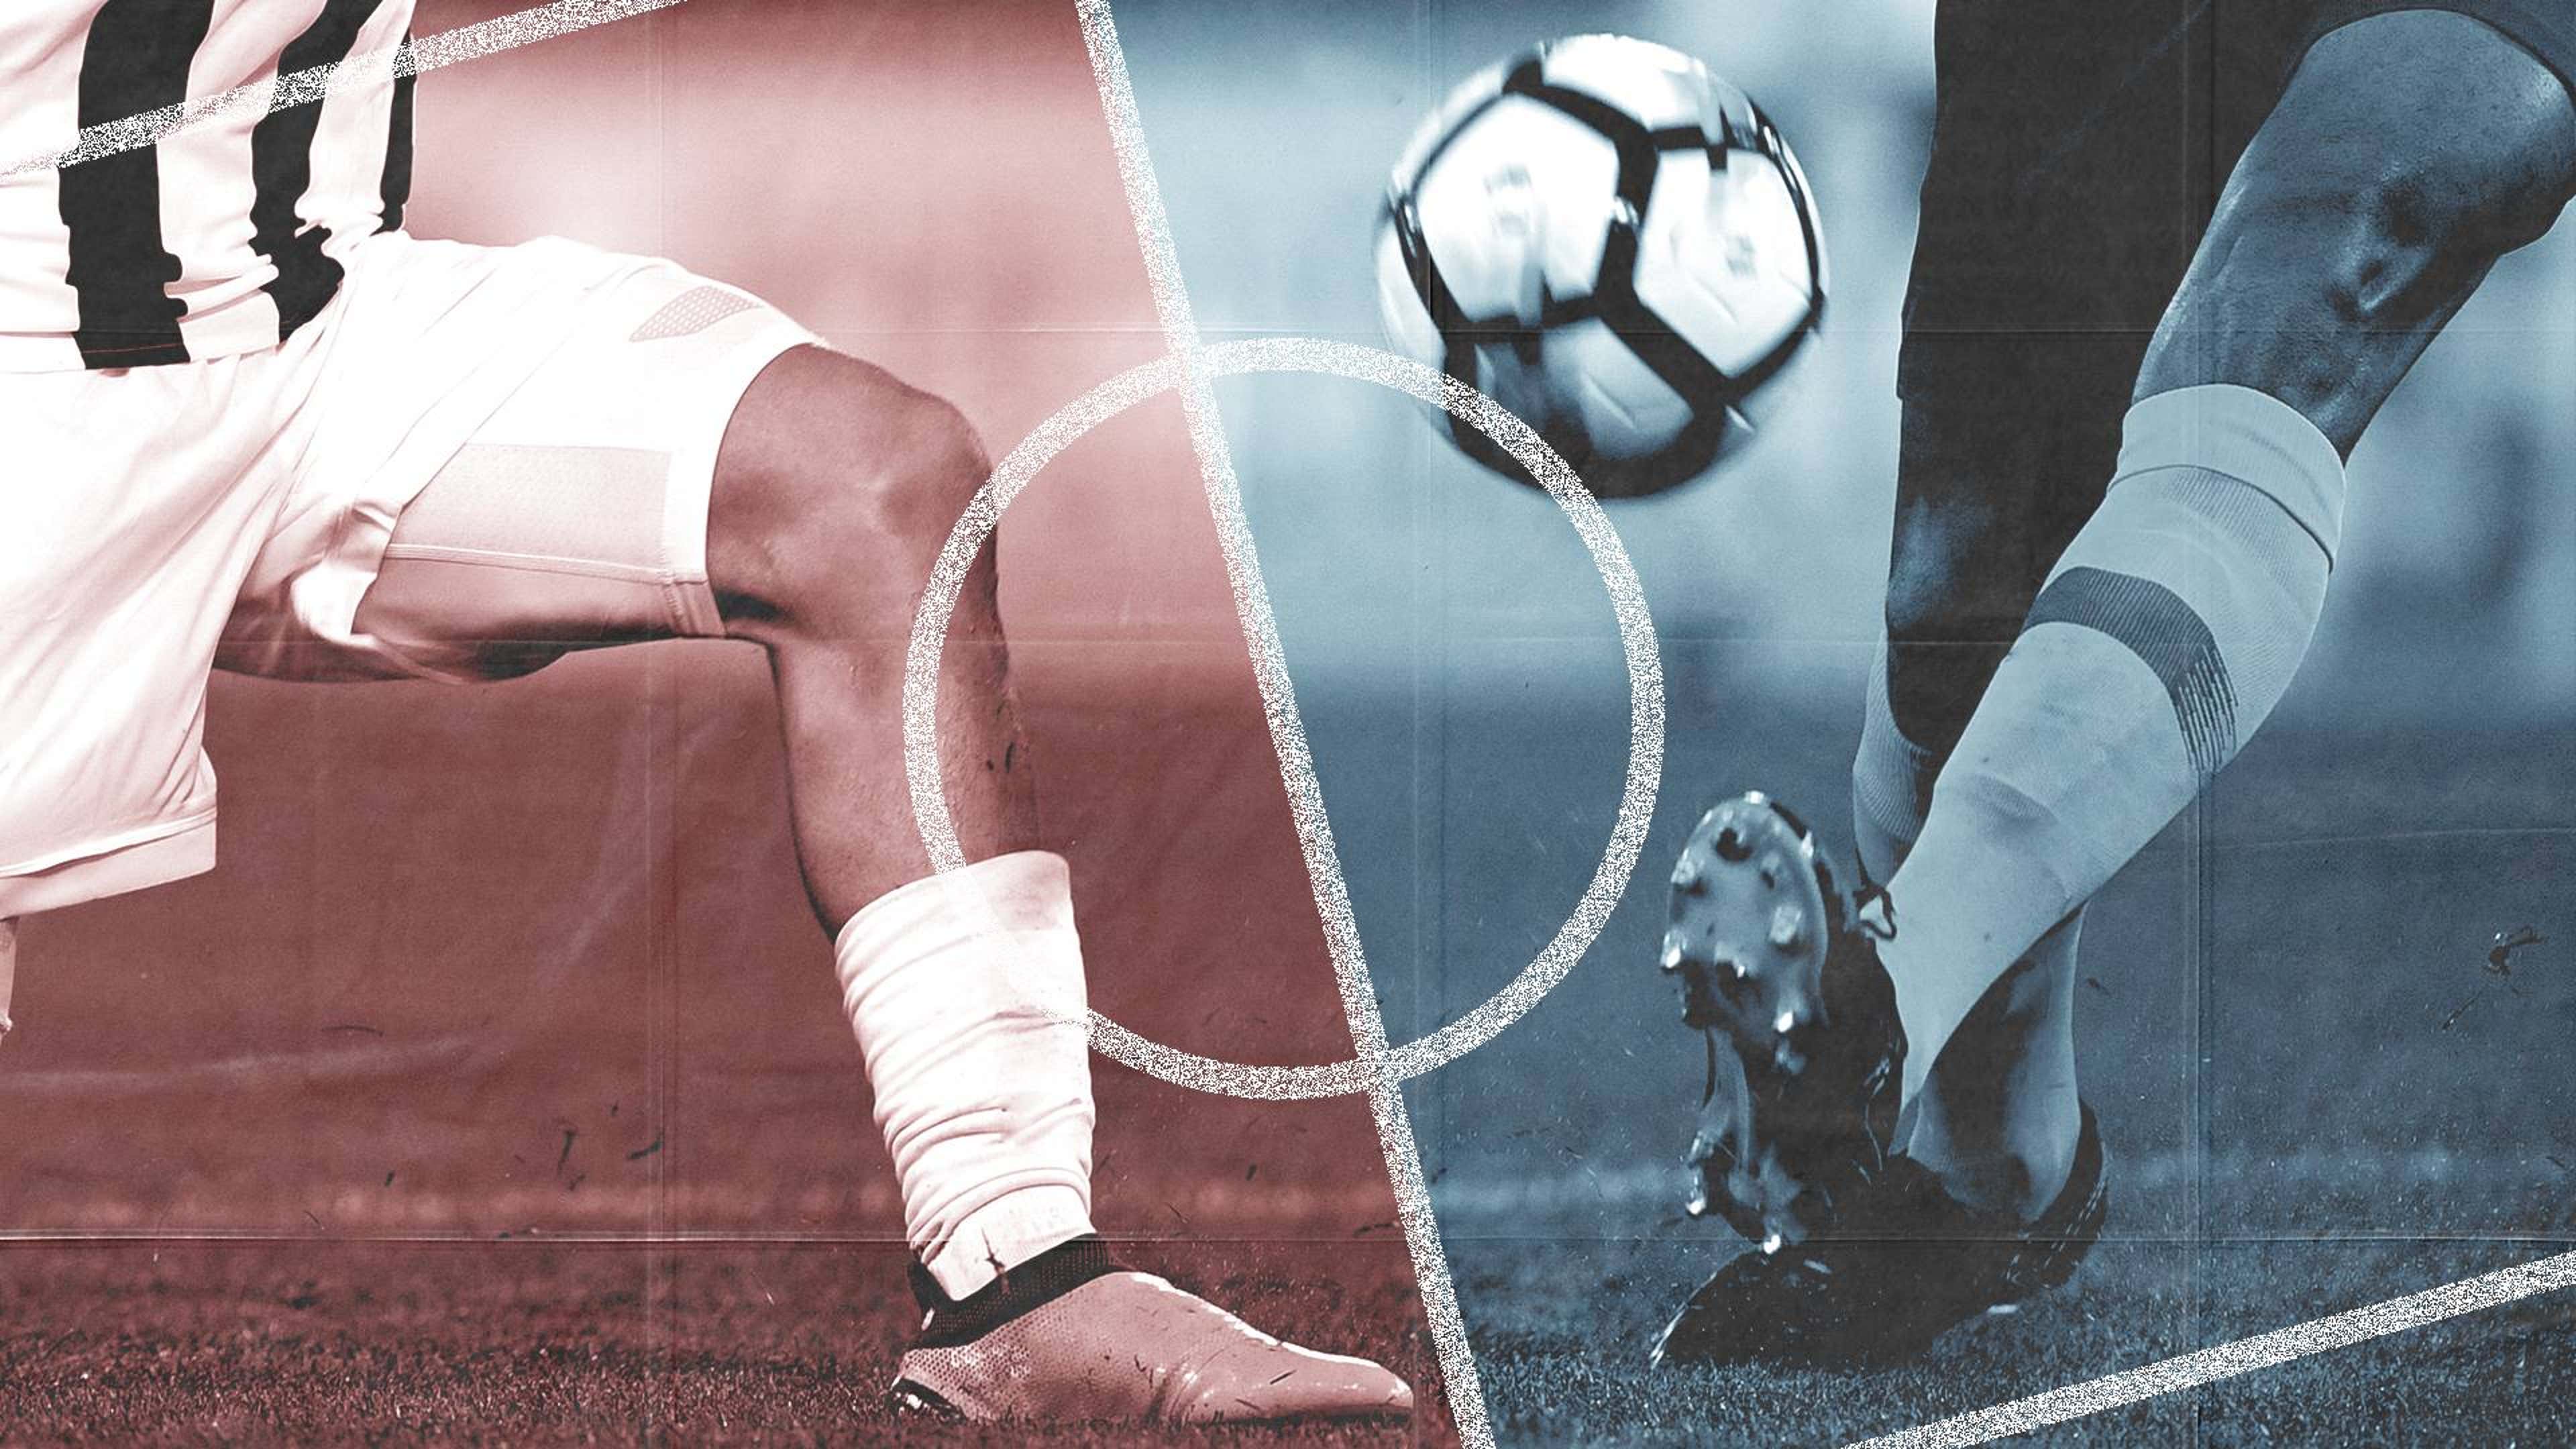 Palpite: Bolívar x Internacional - Libertadores - 22/08/2023